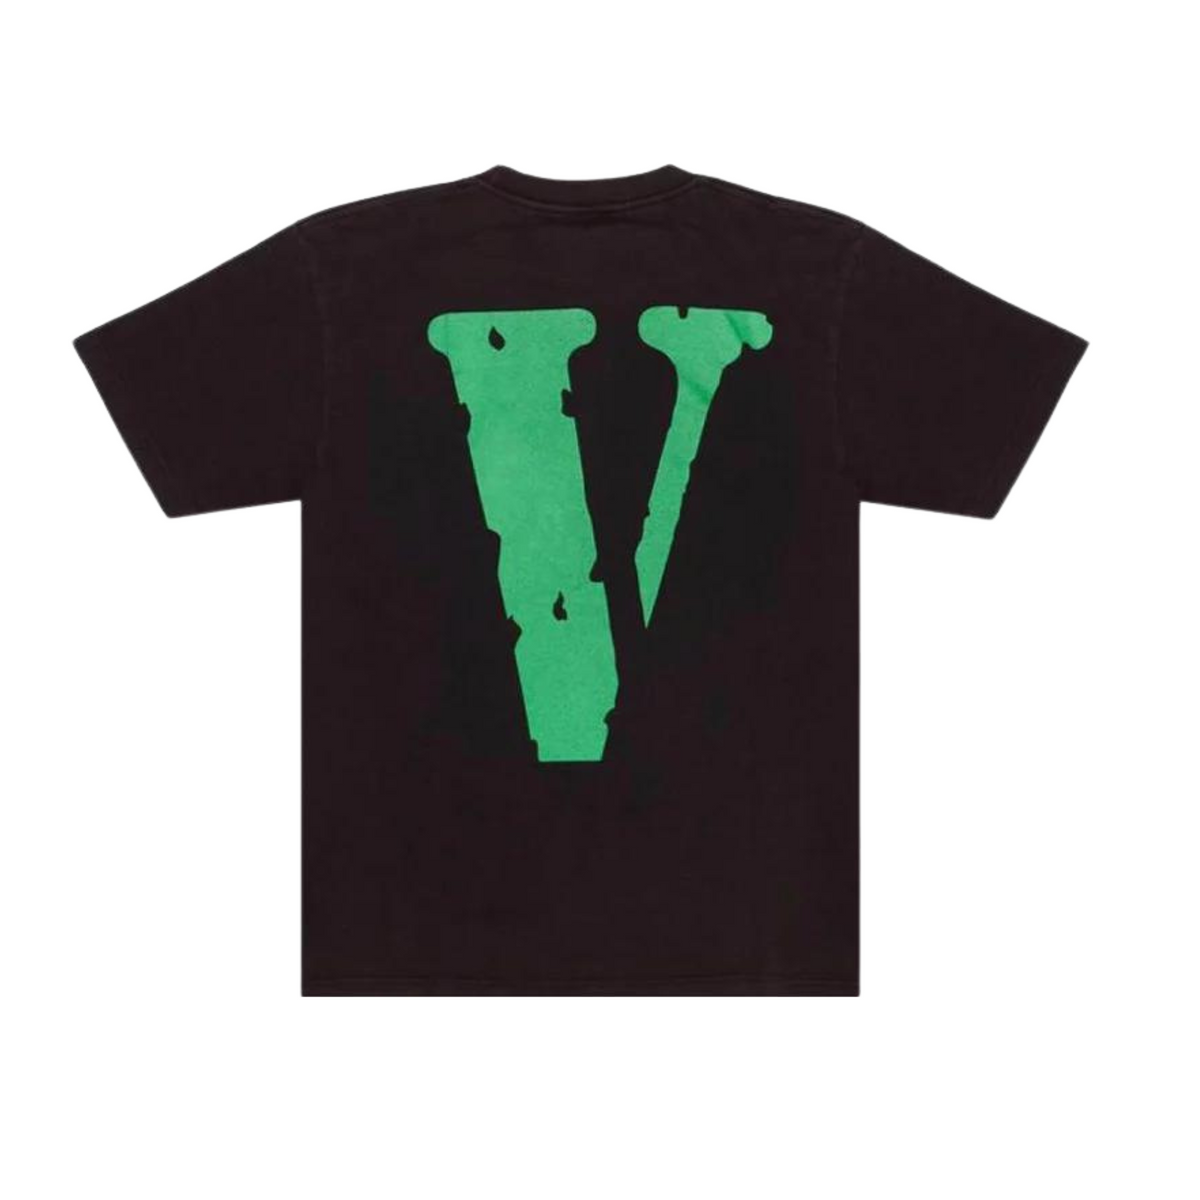 Vlone Friends T-shirt "Black/Green"